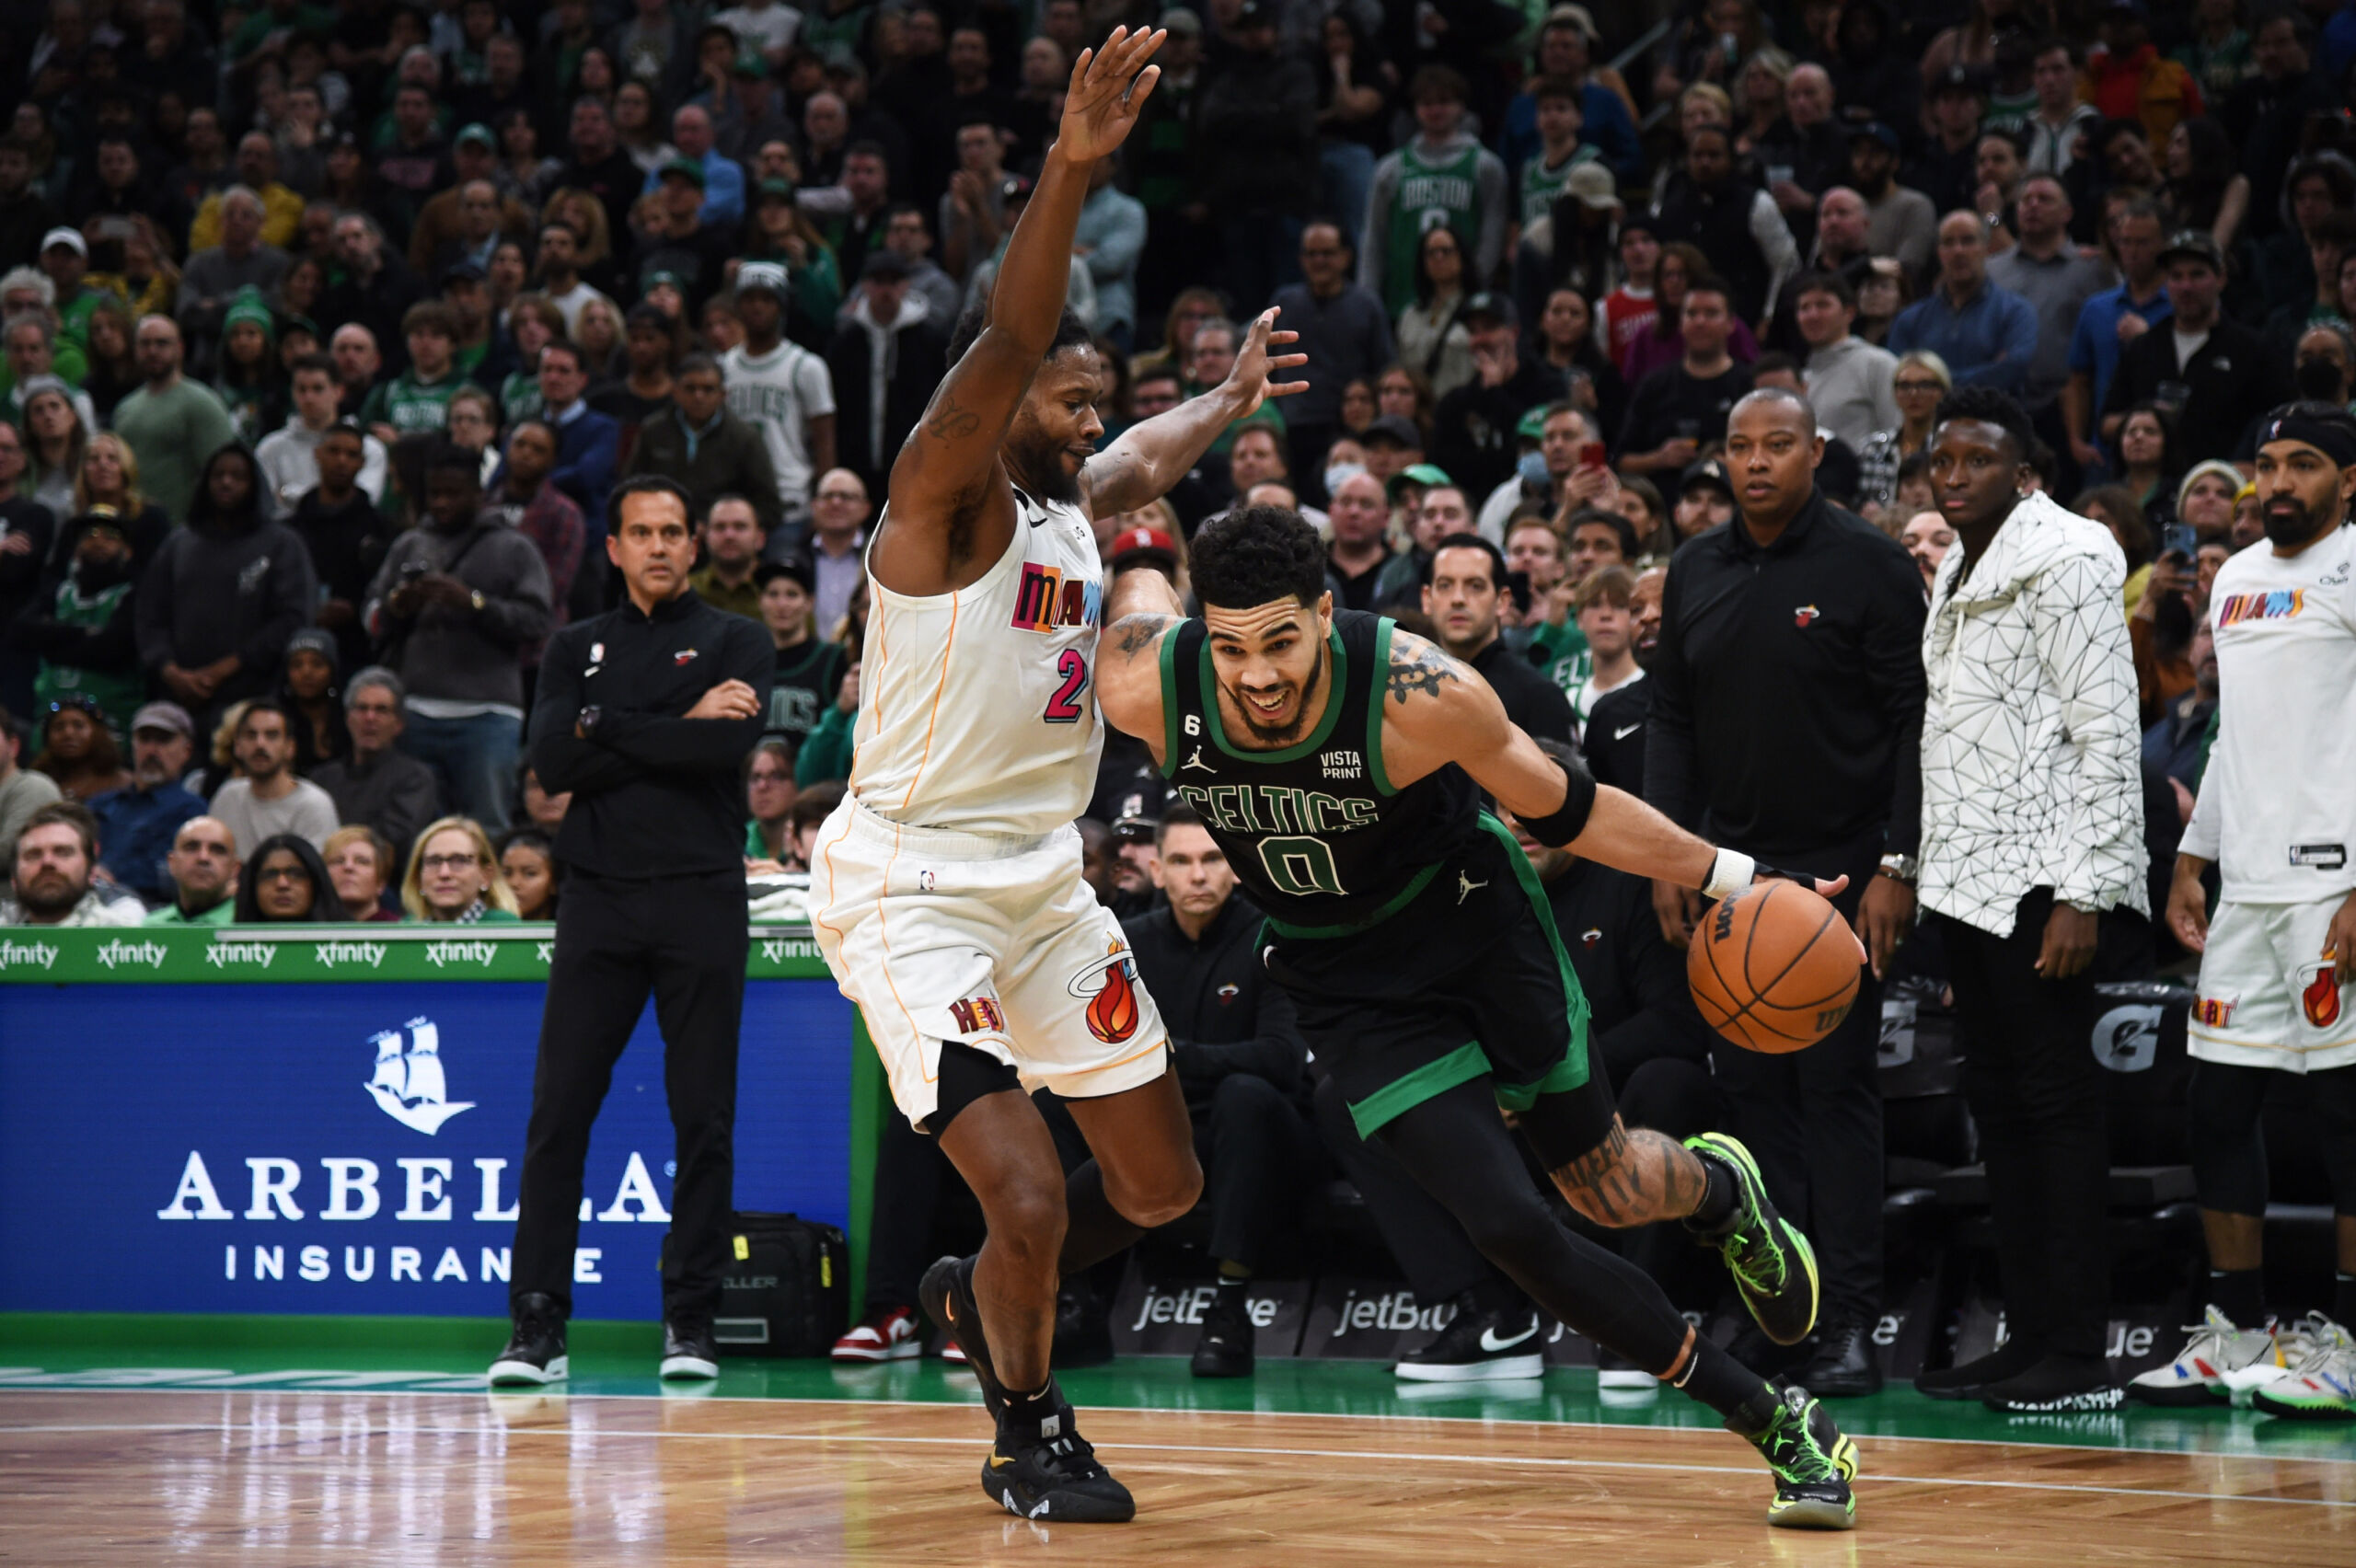 Jayson Tatum finding offensive rhythm as Celtics begin to turn the